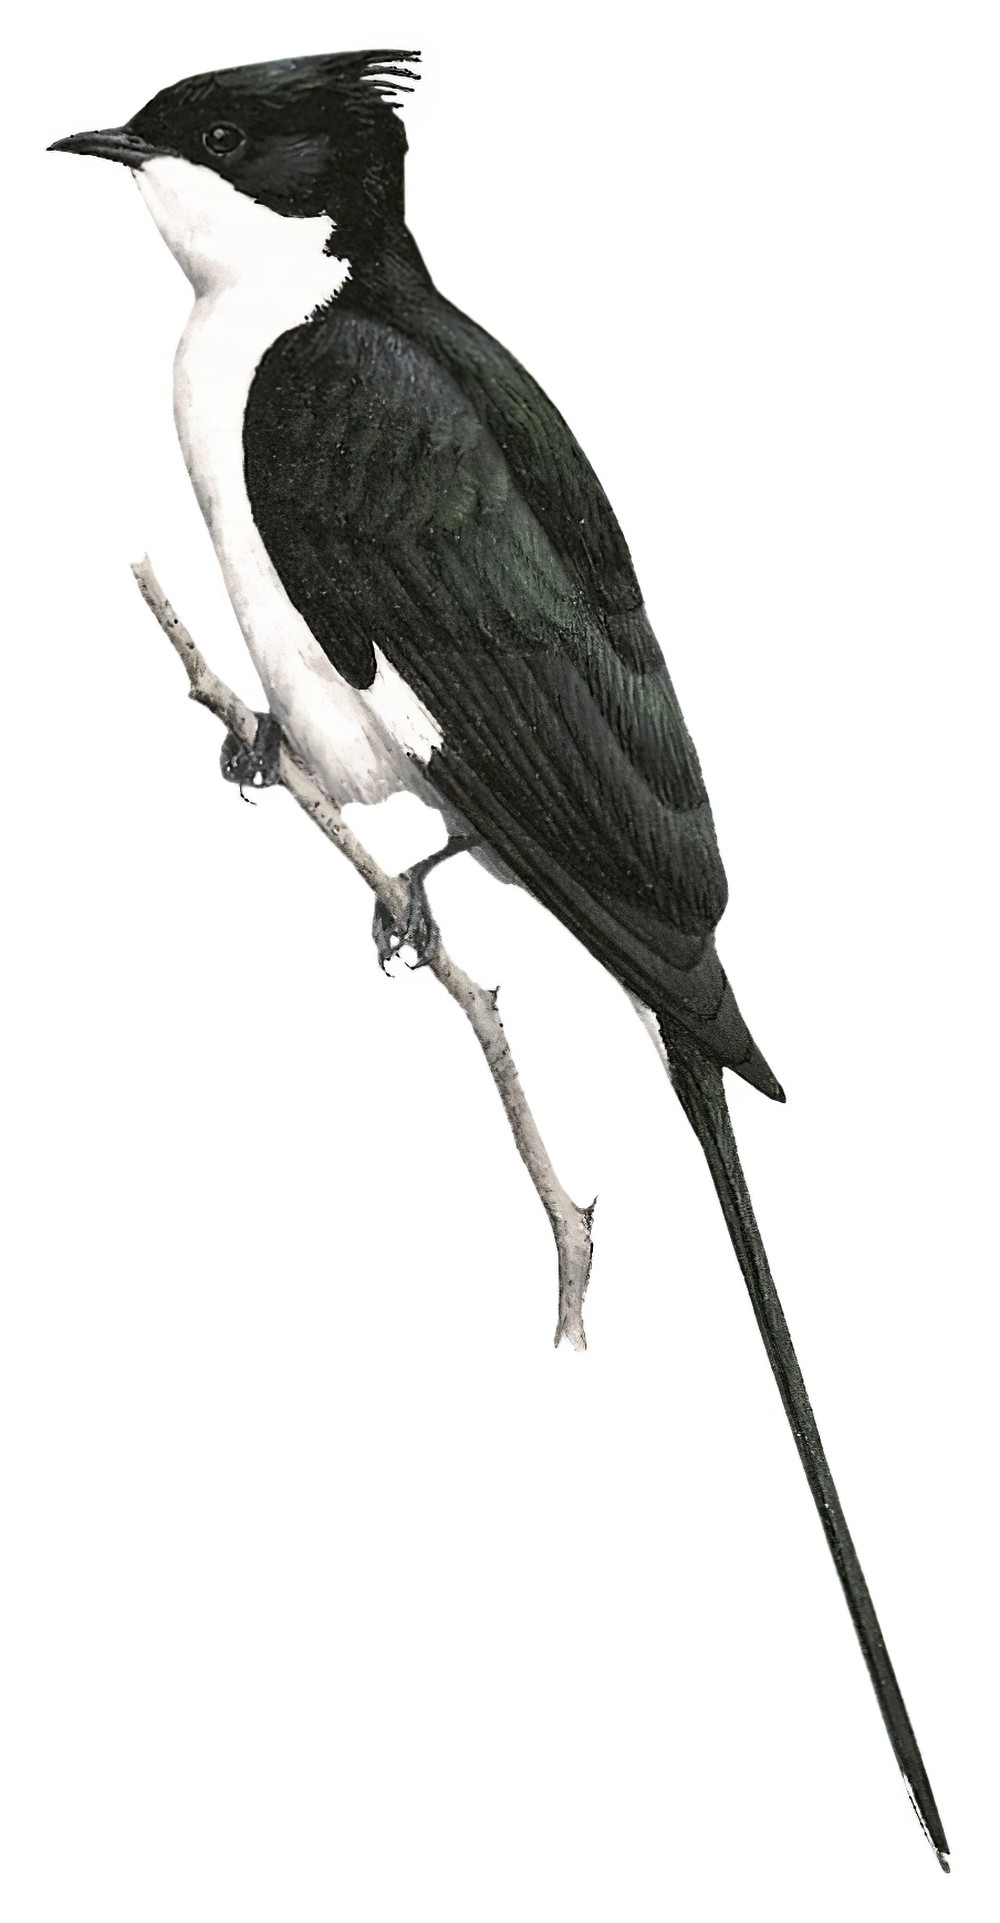 Pied Cuckoo / Clamator jacobinus